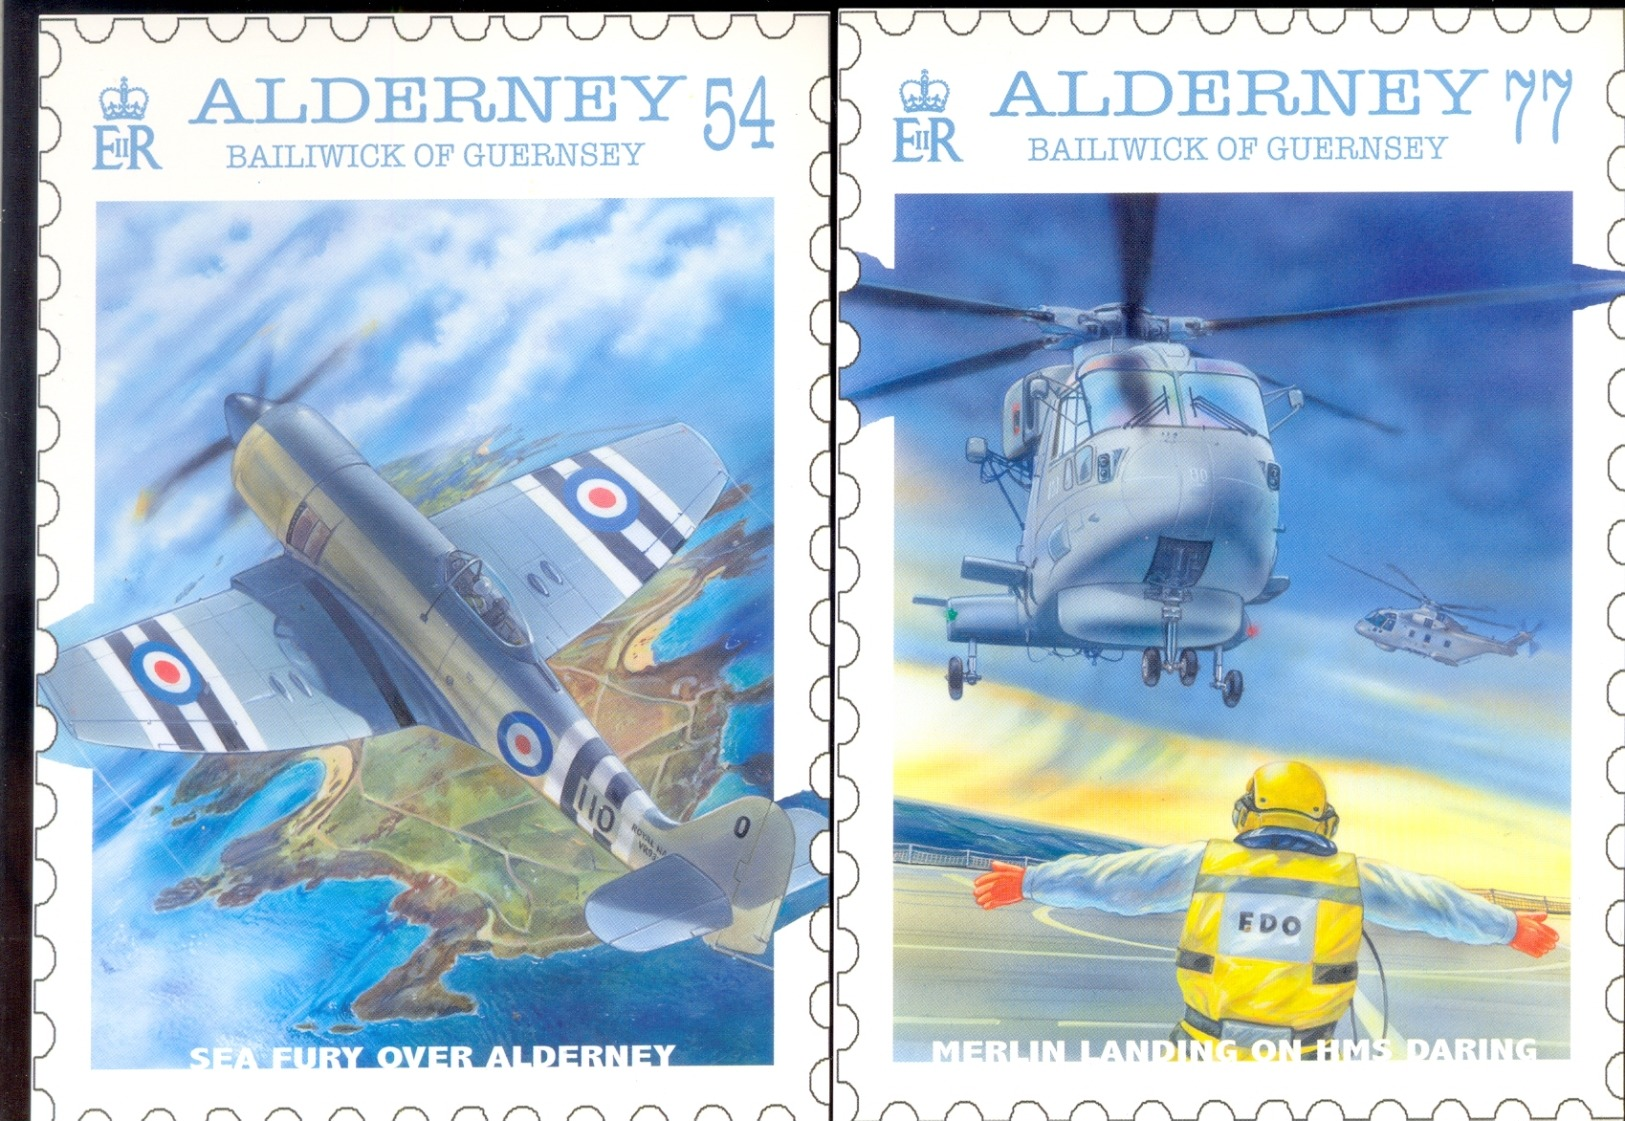 ALDERNEY UK COMPLETE SET PHQ / POST CARDS NAVAL AVIATION 1st DAY CANCELLATION STAMPS * U BOAT AIRPLANES HELICOPTER 2009 - Alderney